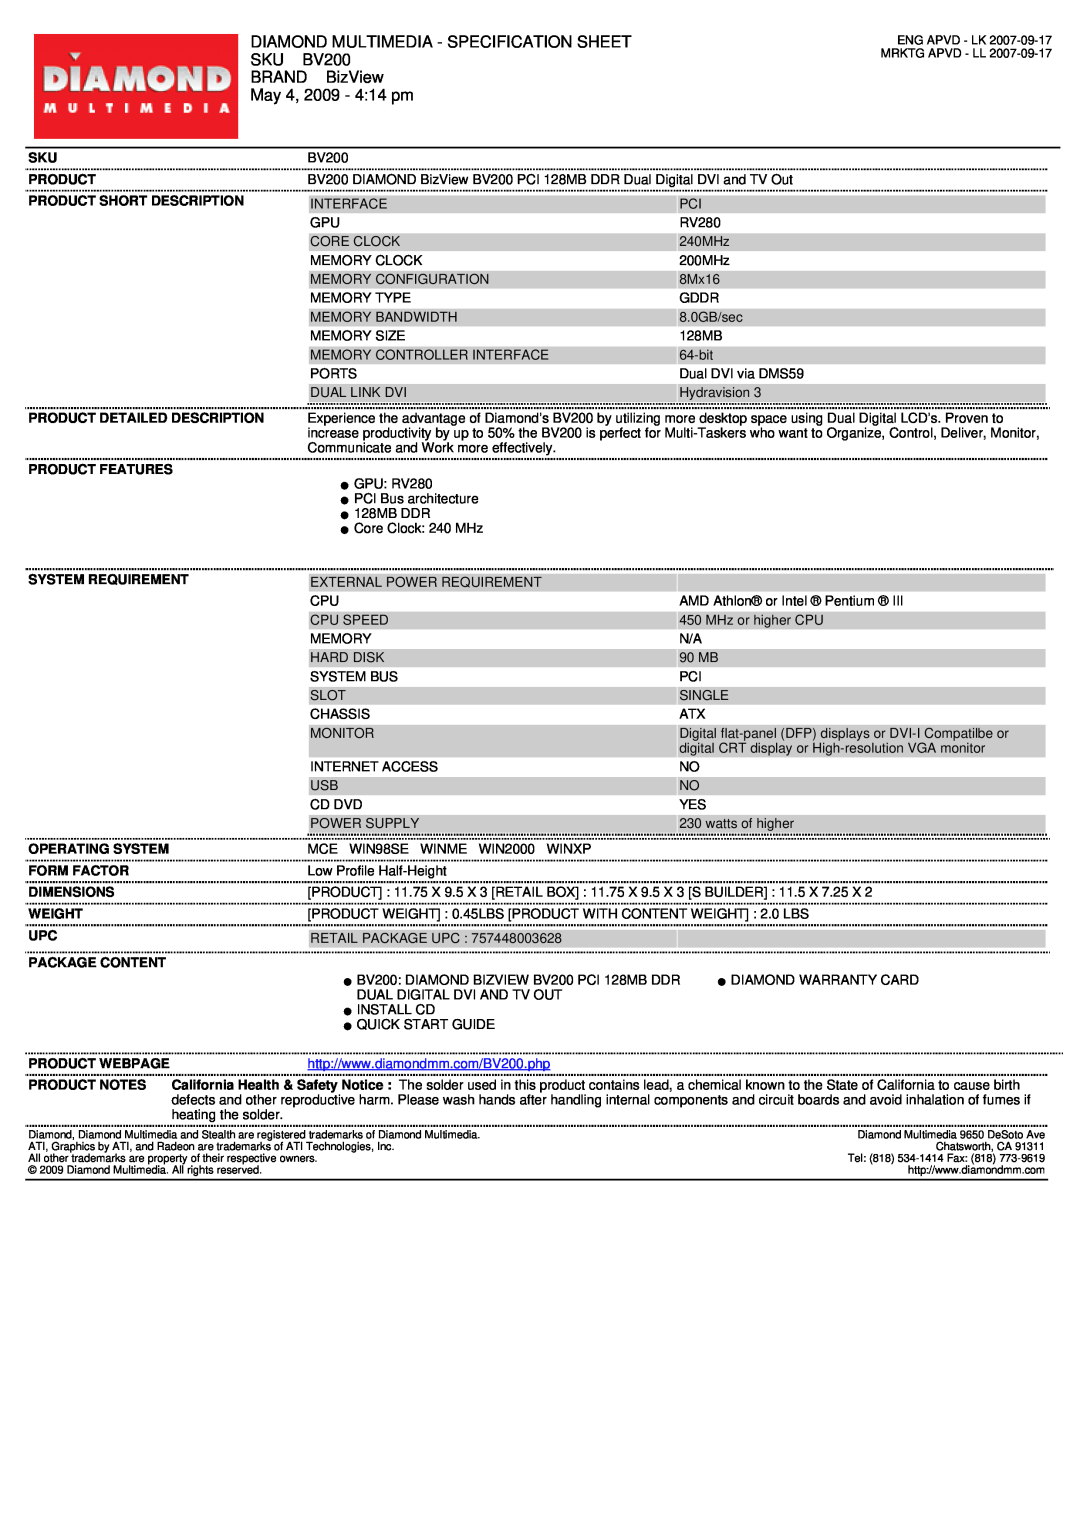 Diamond Multimedia BV200 PCI specifications Diamond Multimedia - Specification Sheet, BRAND BizView, May 4, 2009 - 414 pm 